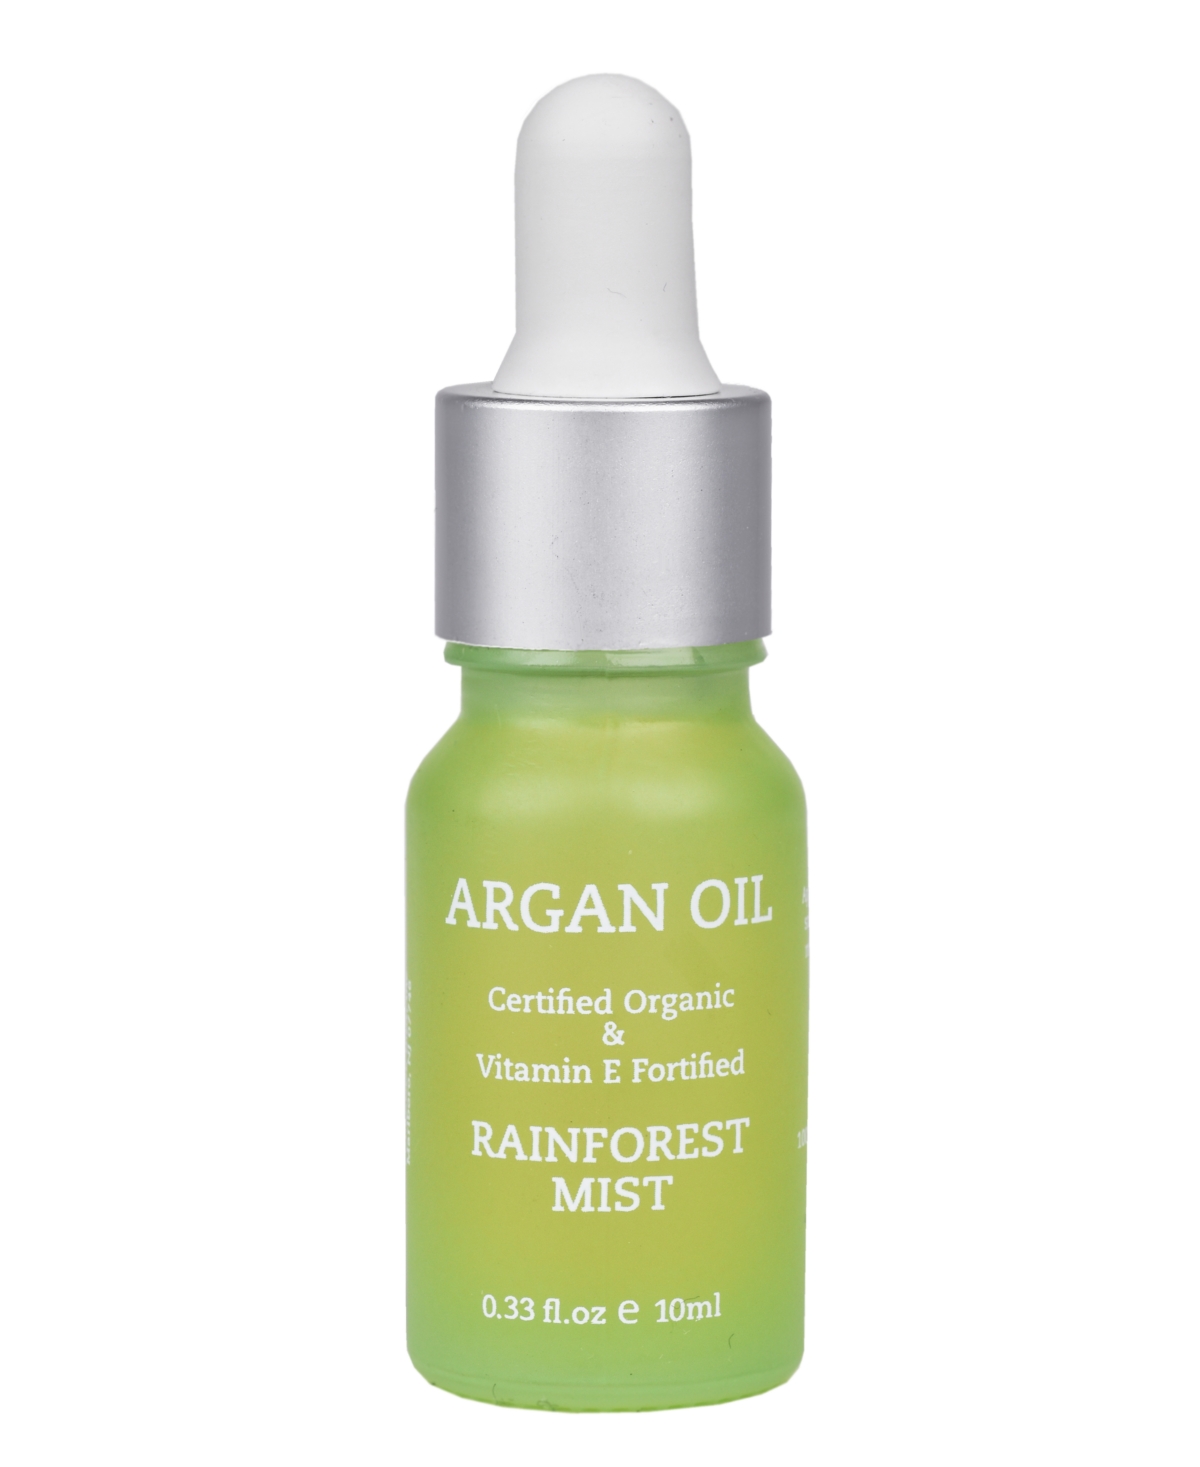 Argan Oil Rainforest Mist, 0.33 oz. - Clear